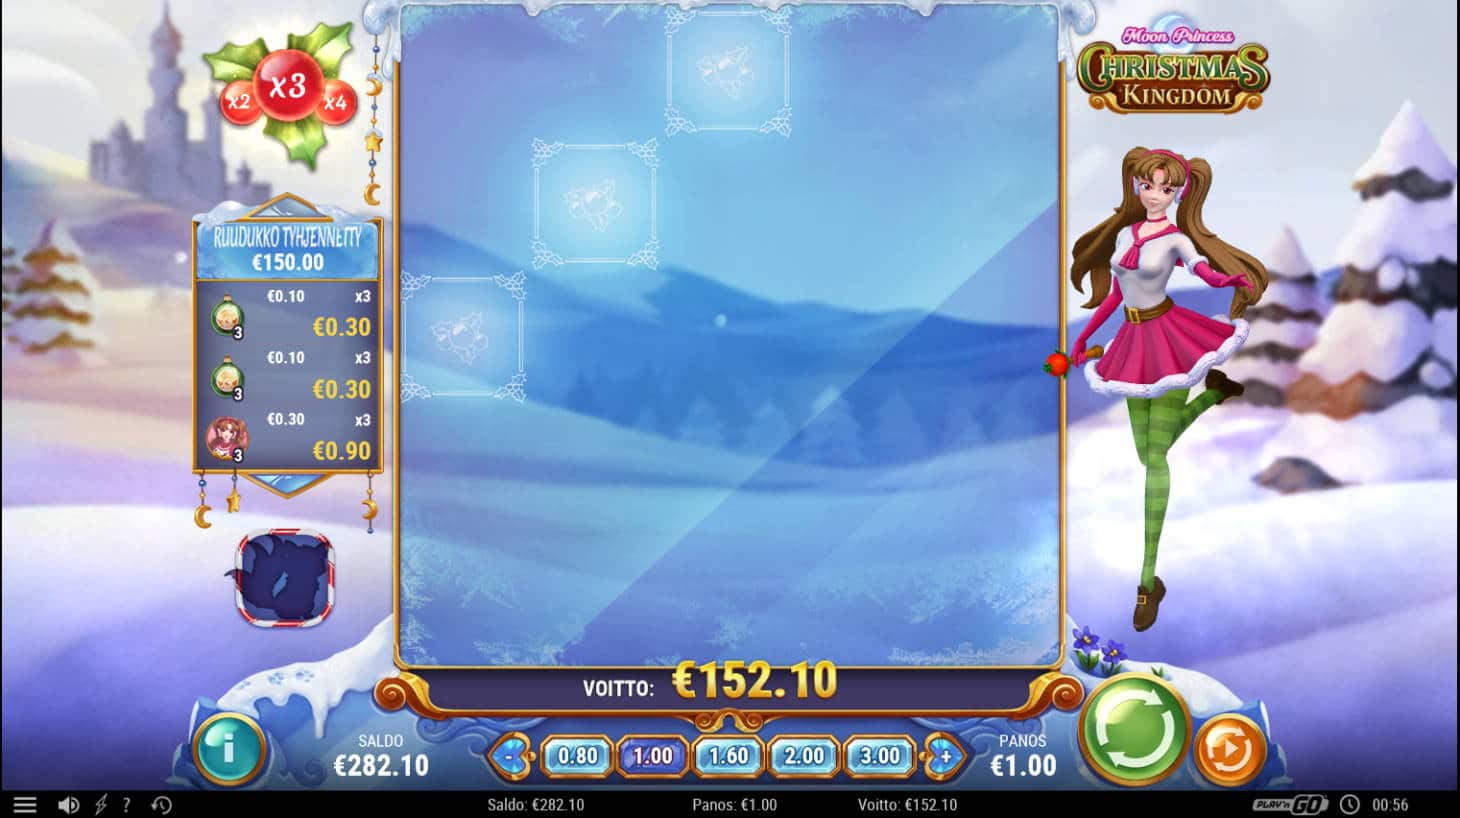 Moon Princess Christmas Kingdom Casino win picture by Kari Grandi 8.12.2021 152.10e 152X